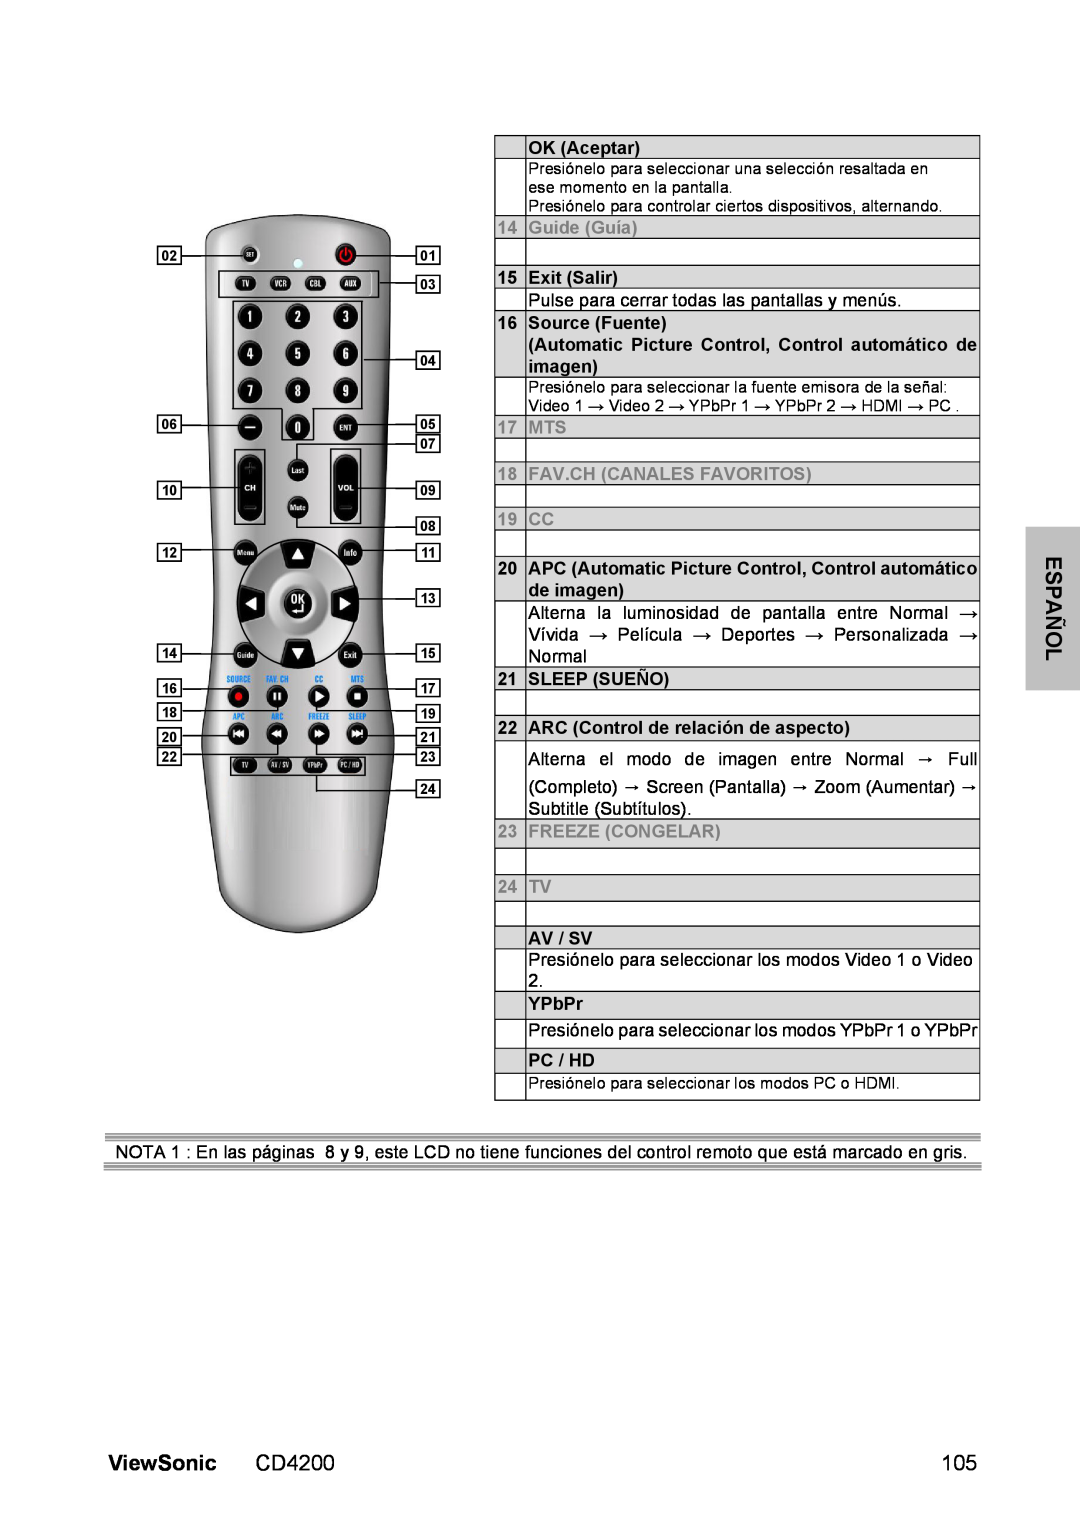 ViewSonic manual Español, ViewSonic CD4200, Guide Guía, MTS 18 FAV.CH CANALES FAVORITOS 19 CC, FREEZE CONGELAR 24 TV 